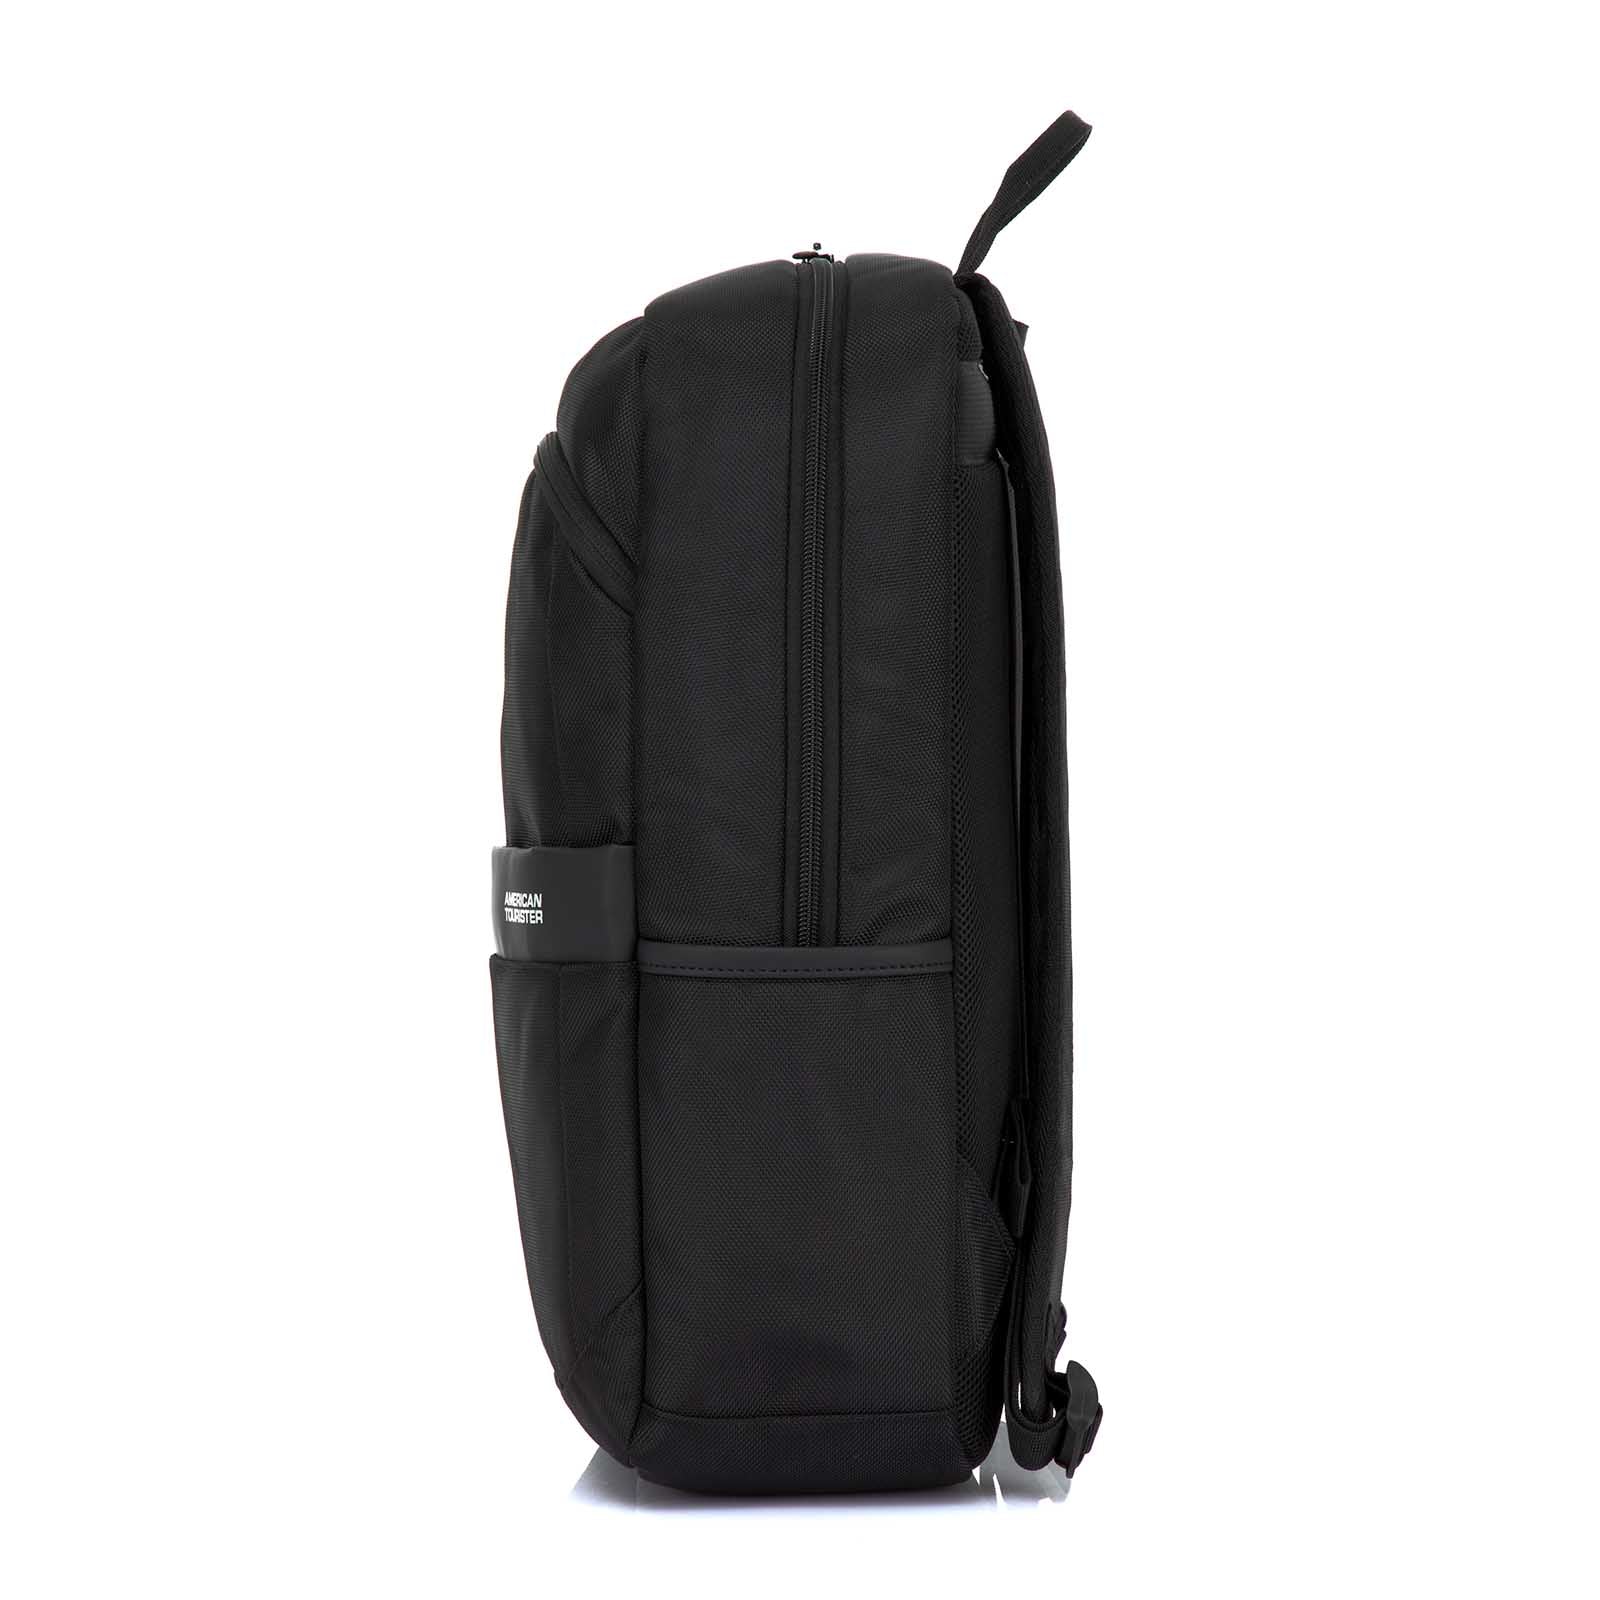 American-Tourister-Kamden-15-Inch-Laptop-Backpack-Black-Side-RH